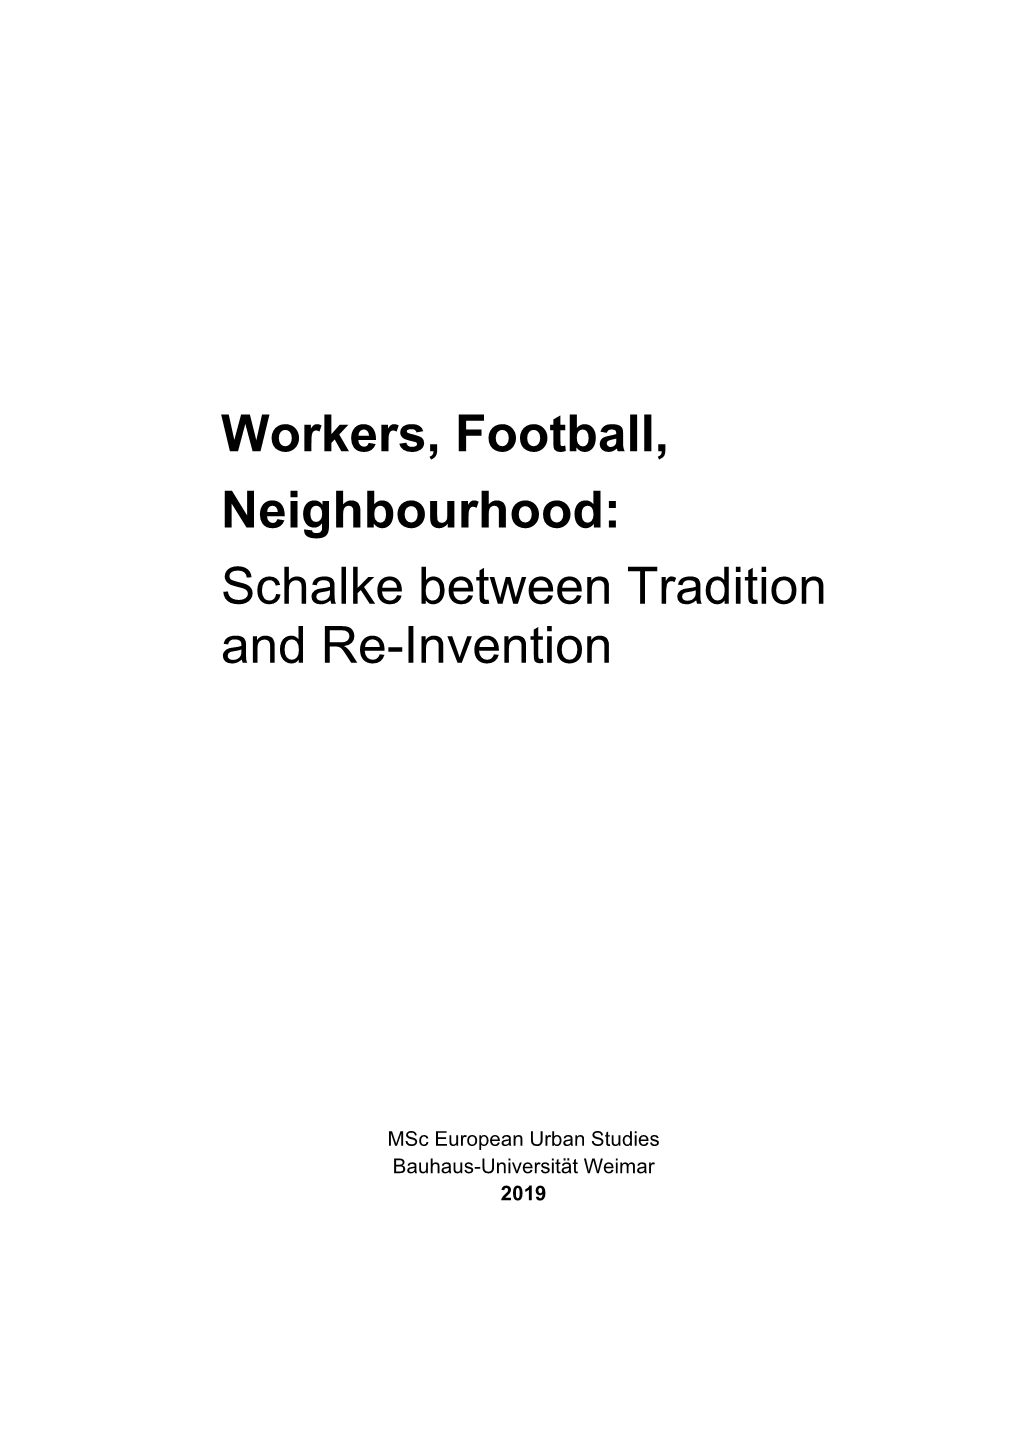 Workers, Football, Neighbourhood: Schalke Between Tradition and Re-Invention